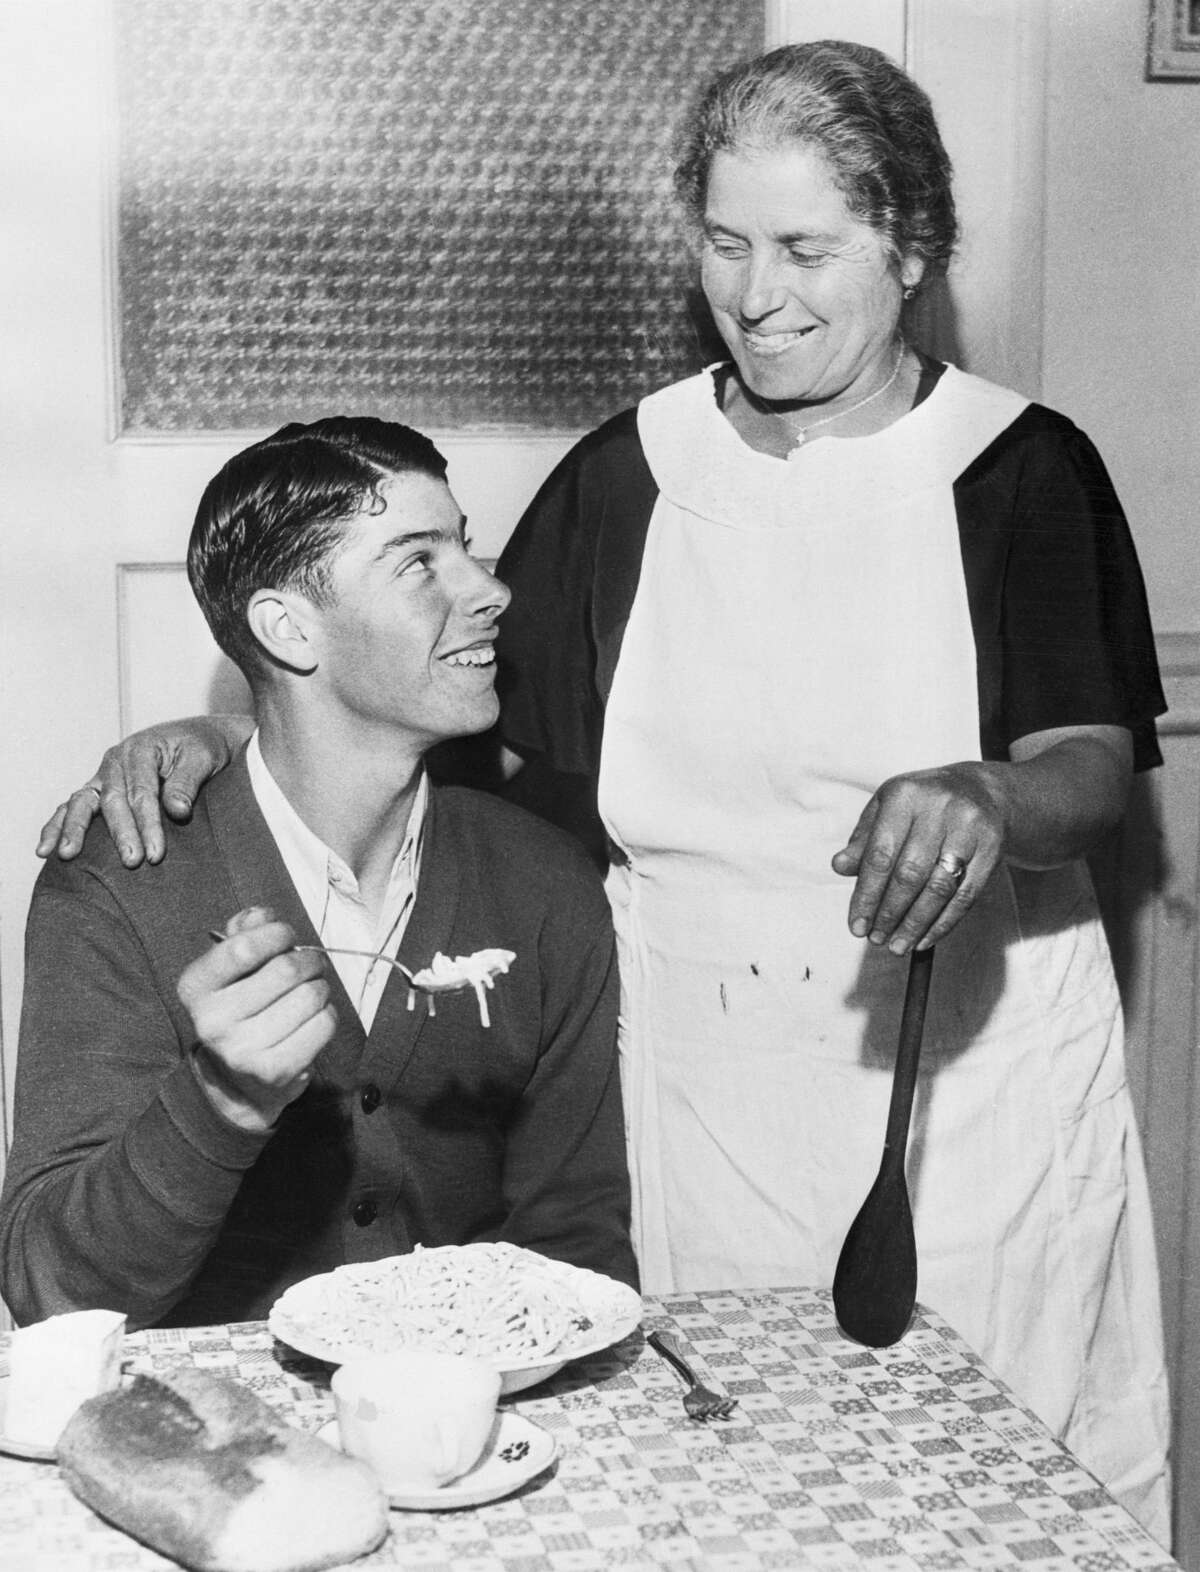 Young Joe DiMaggio eating spaghetti while his mother Rosalia looks on.